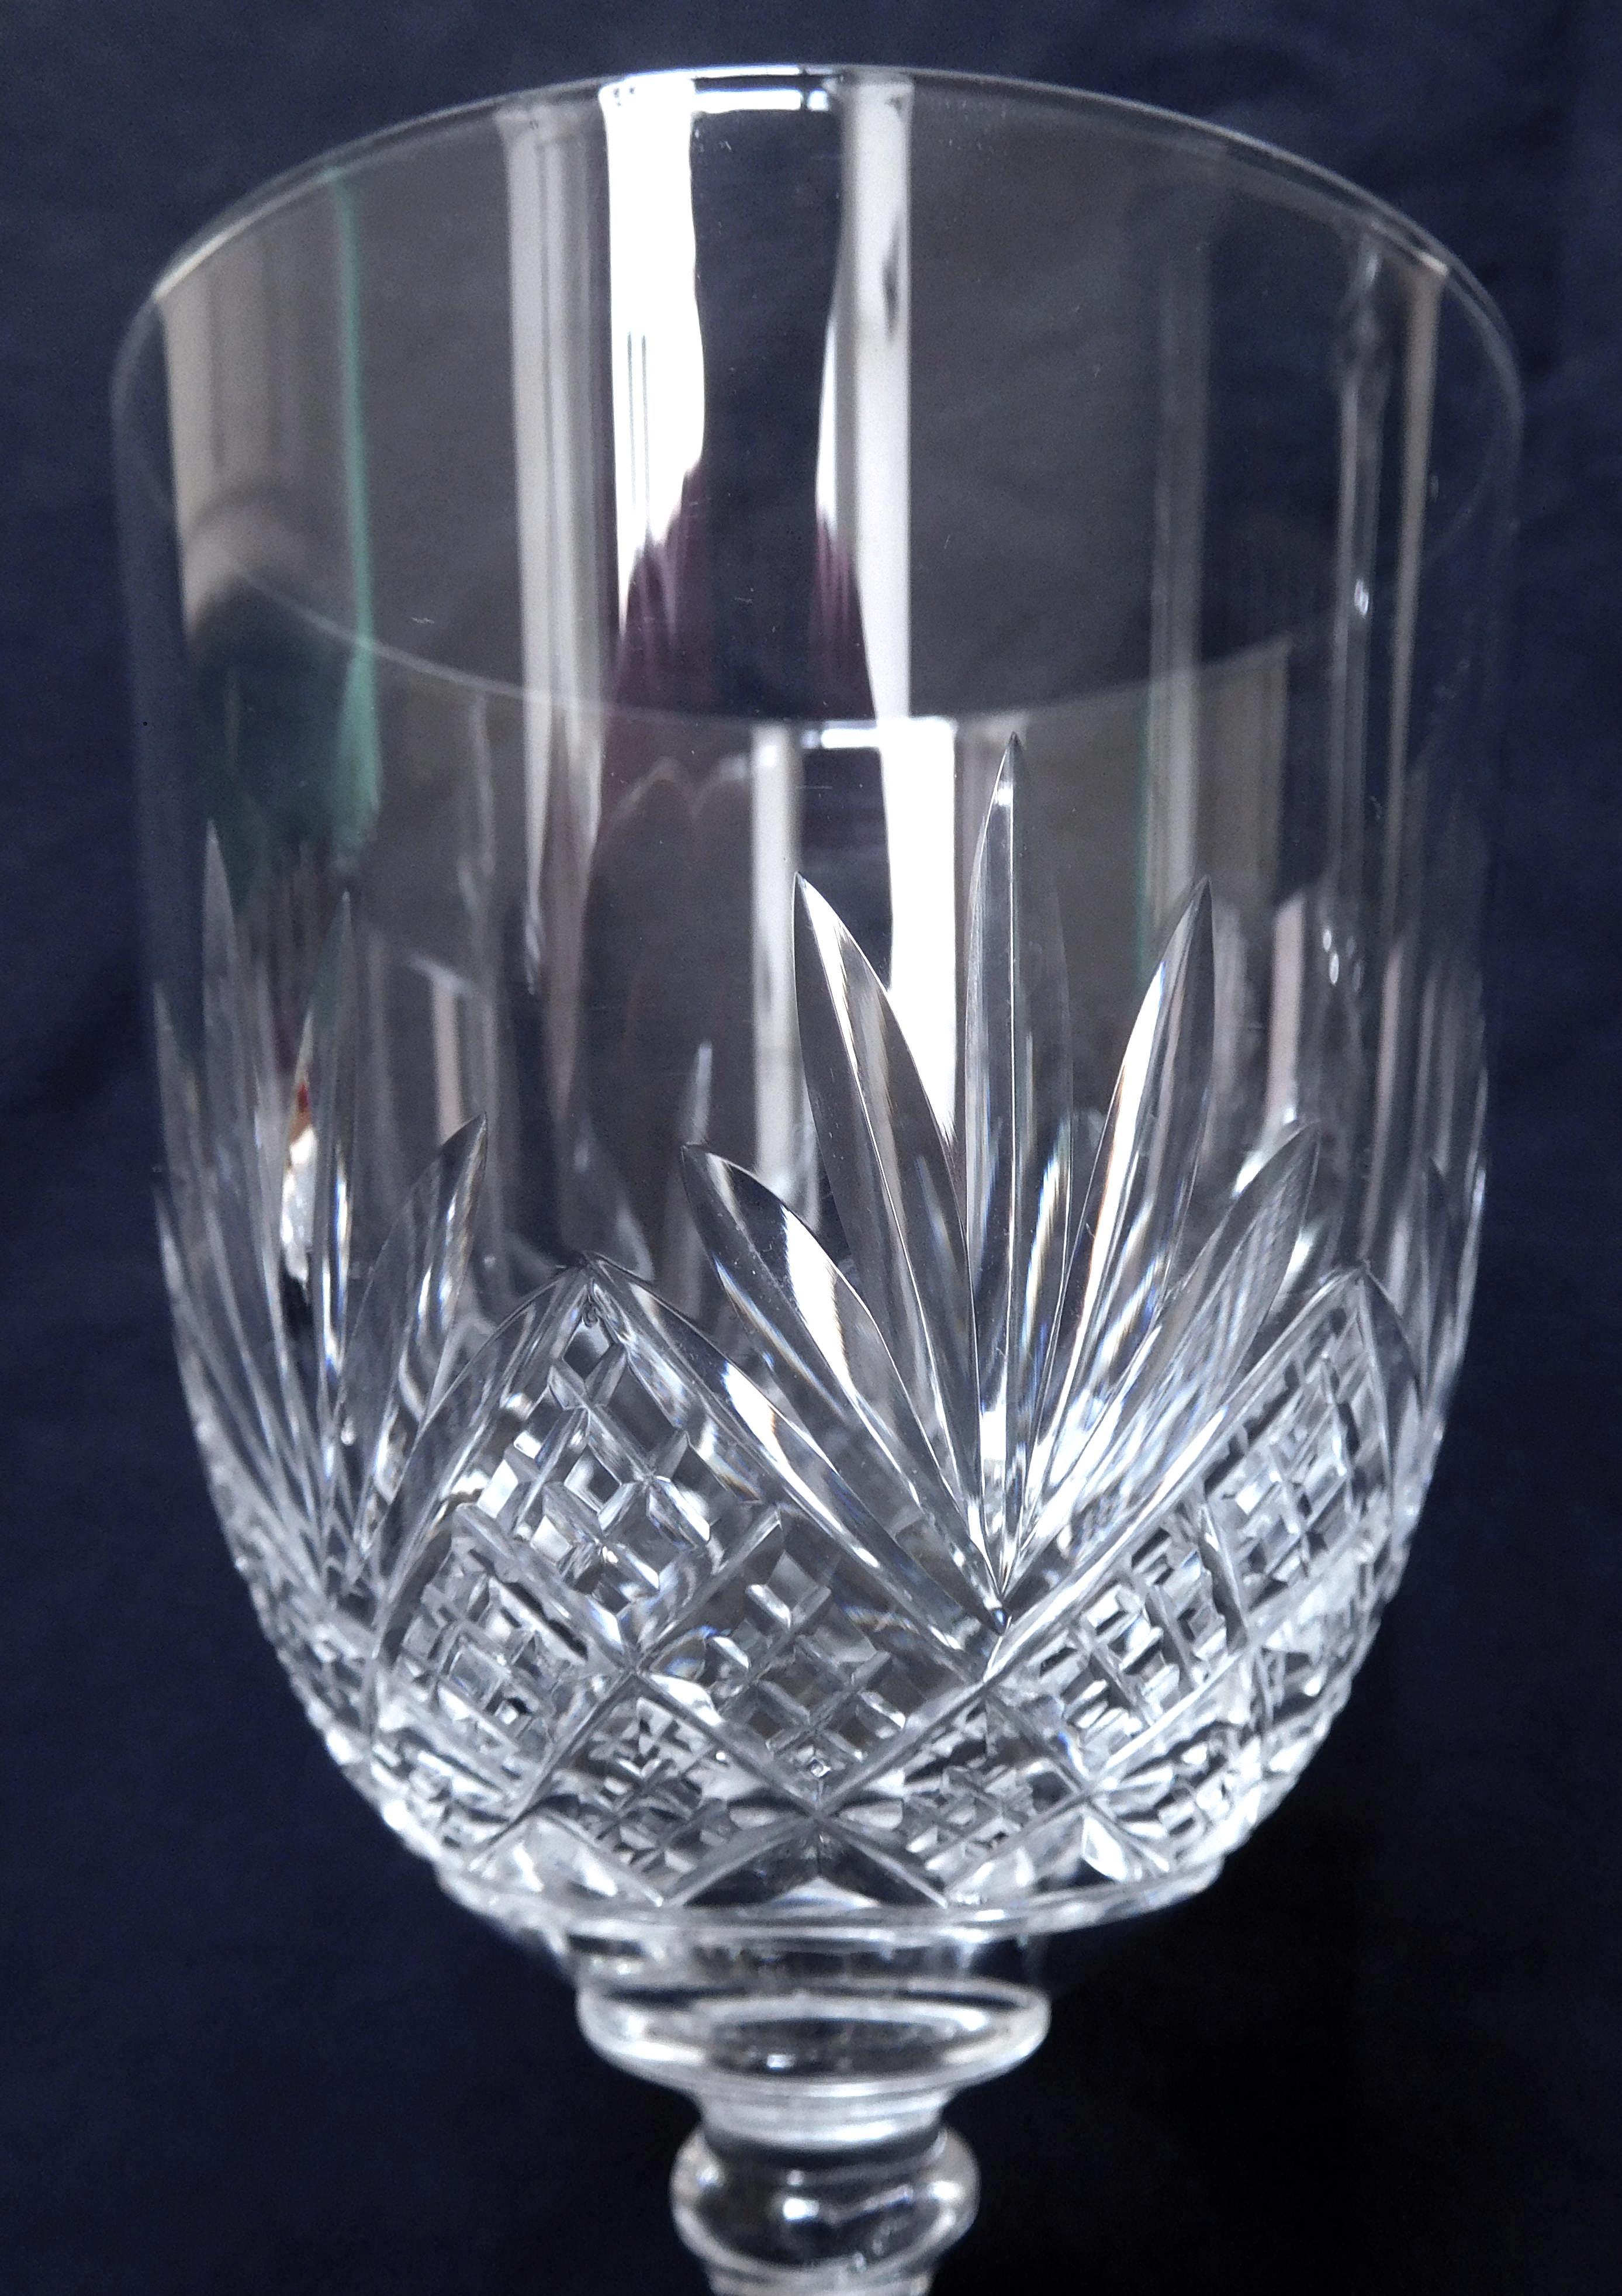 Modern French antique set of 3 Baccarat crystal glasses - France - Douai model For Sale